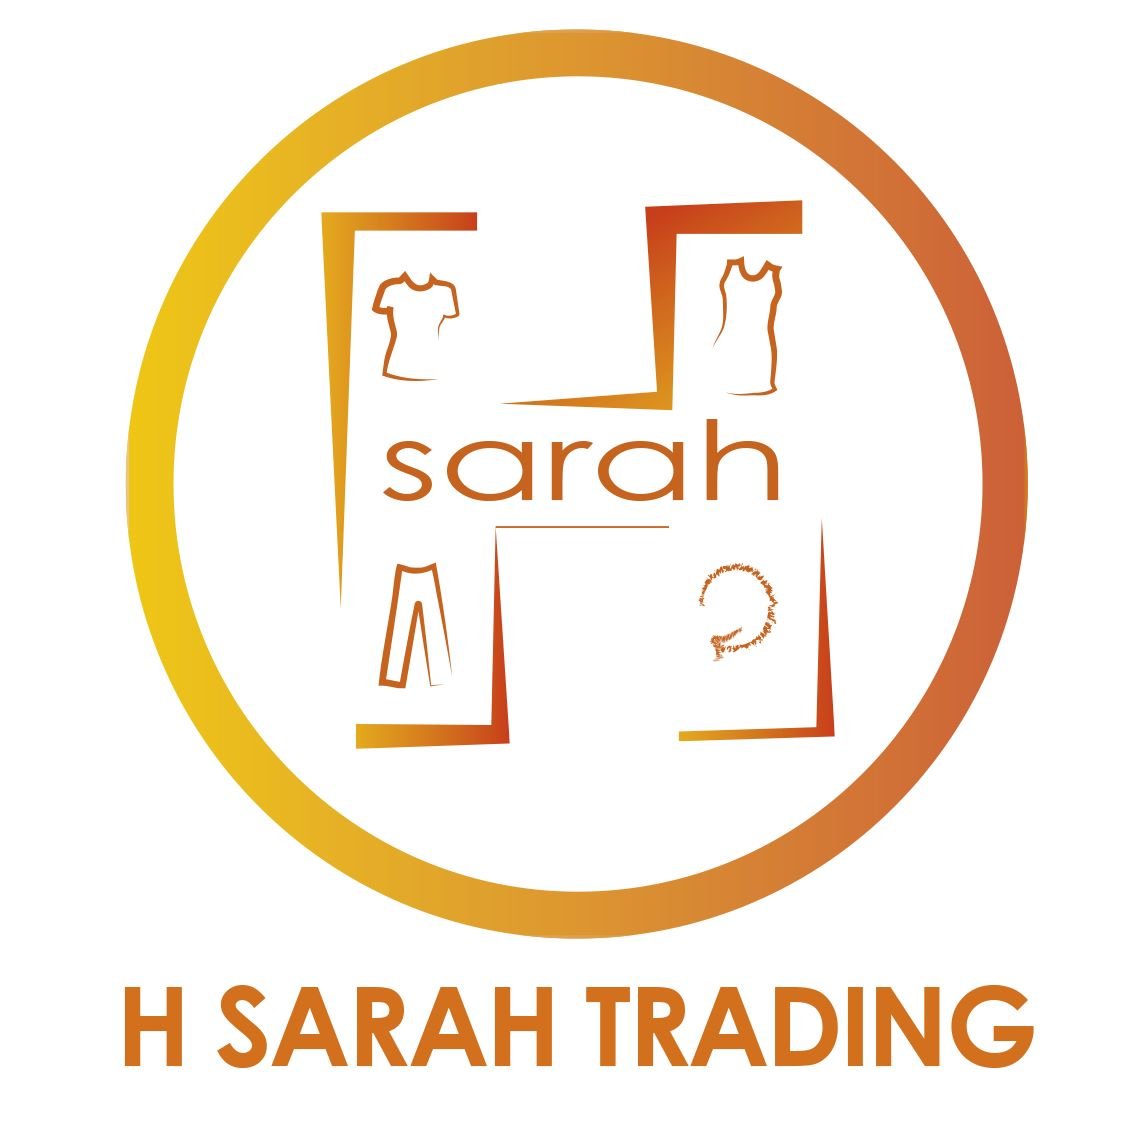 H Sarah Trading Unipessoal Lda